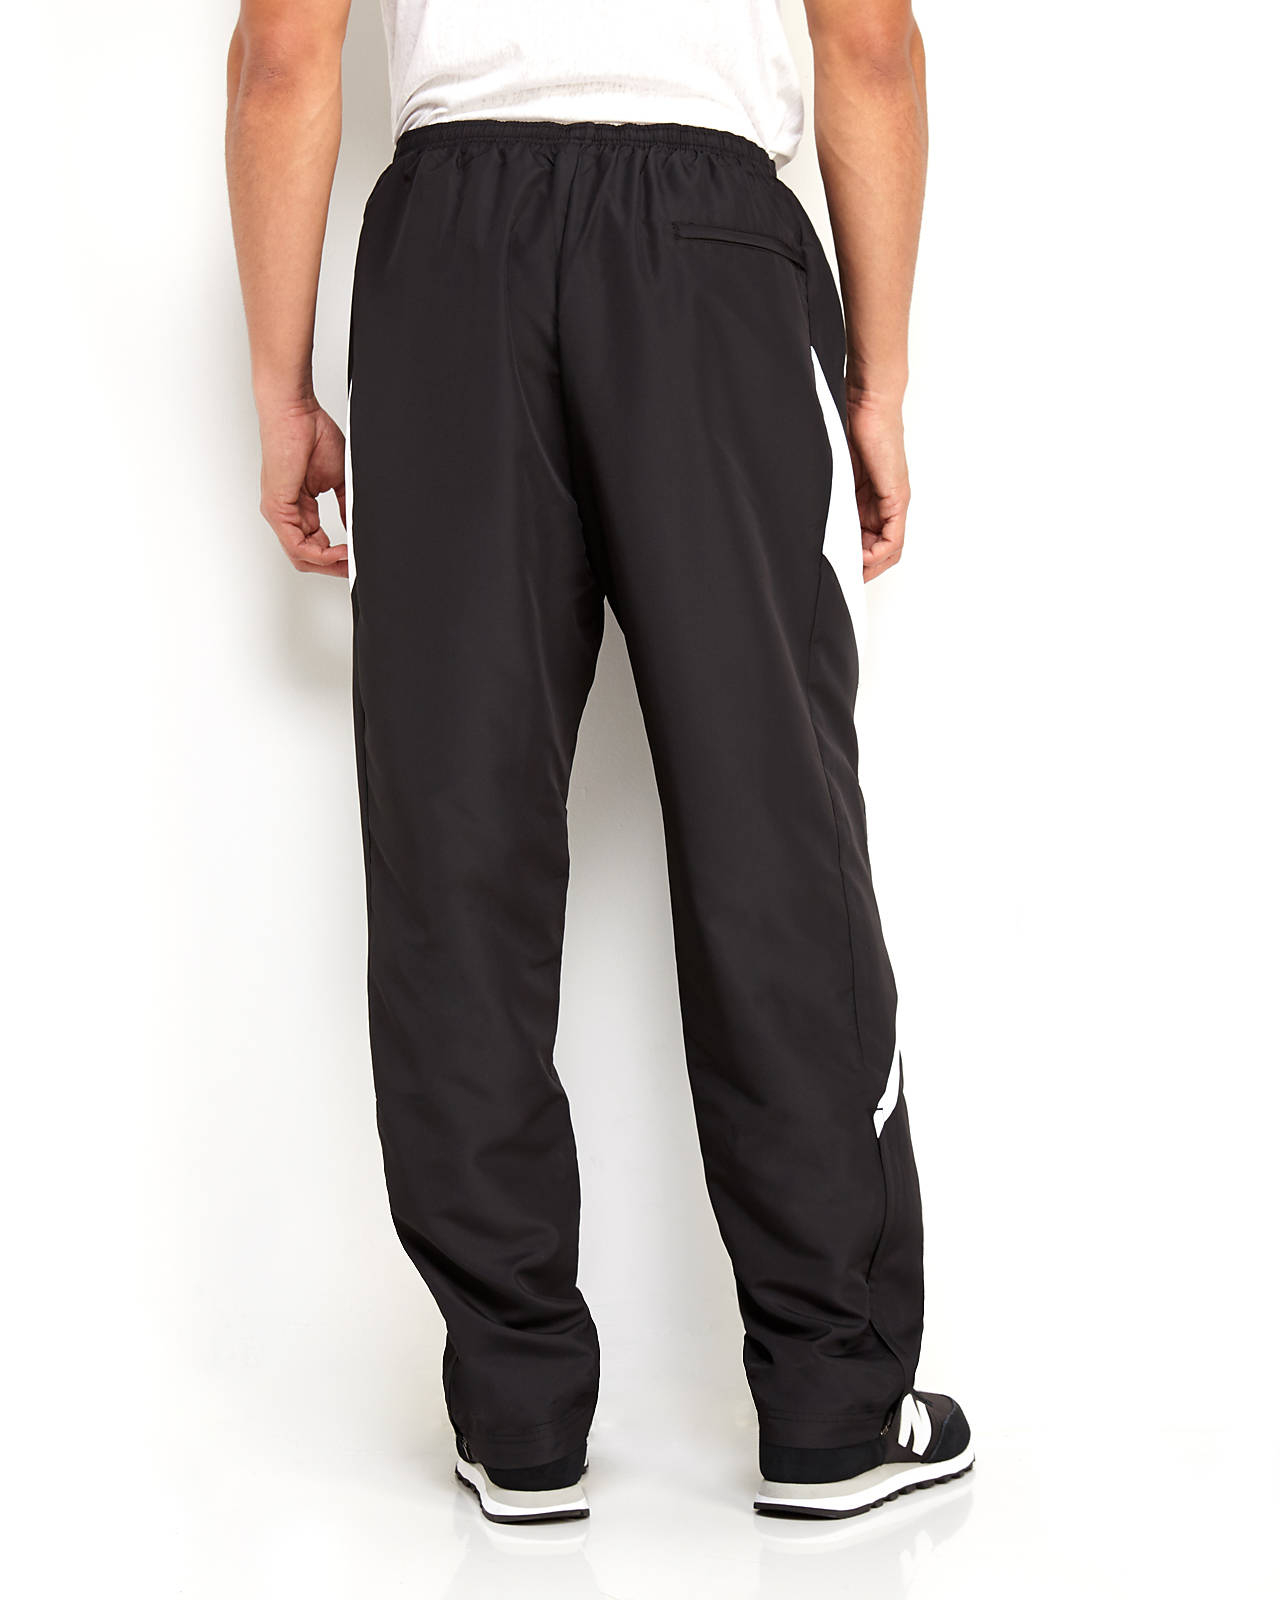 Lyst - Reebok Black White Warm-up Pants in Black for Men